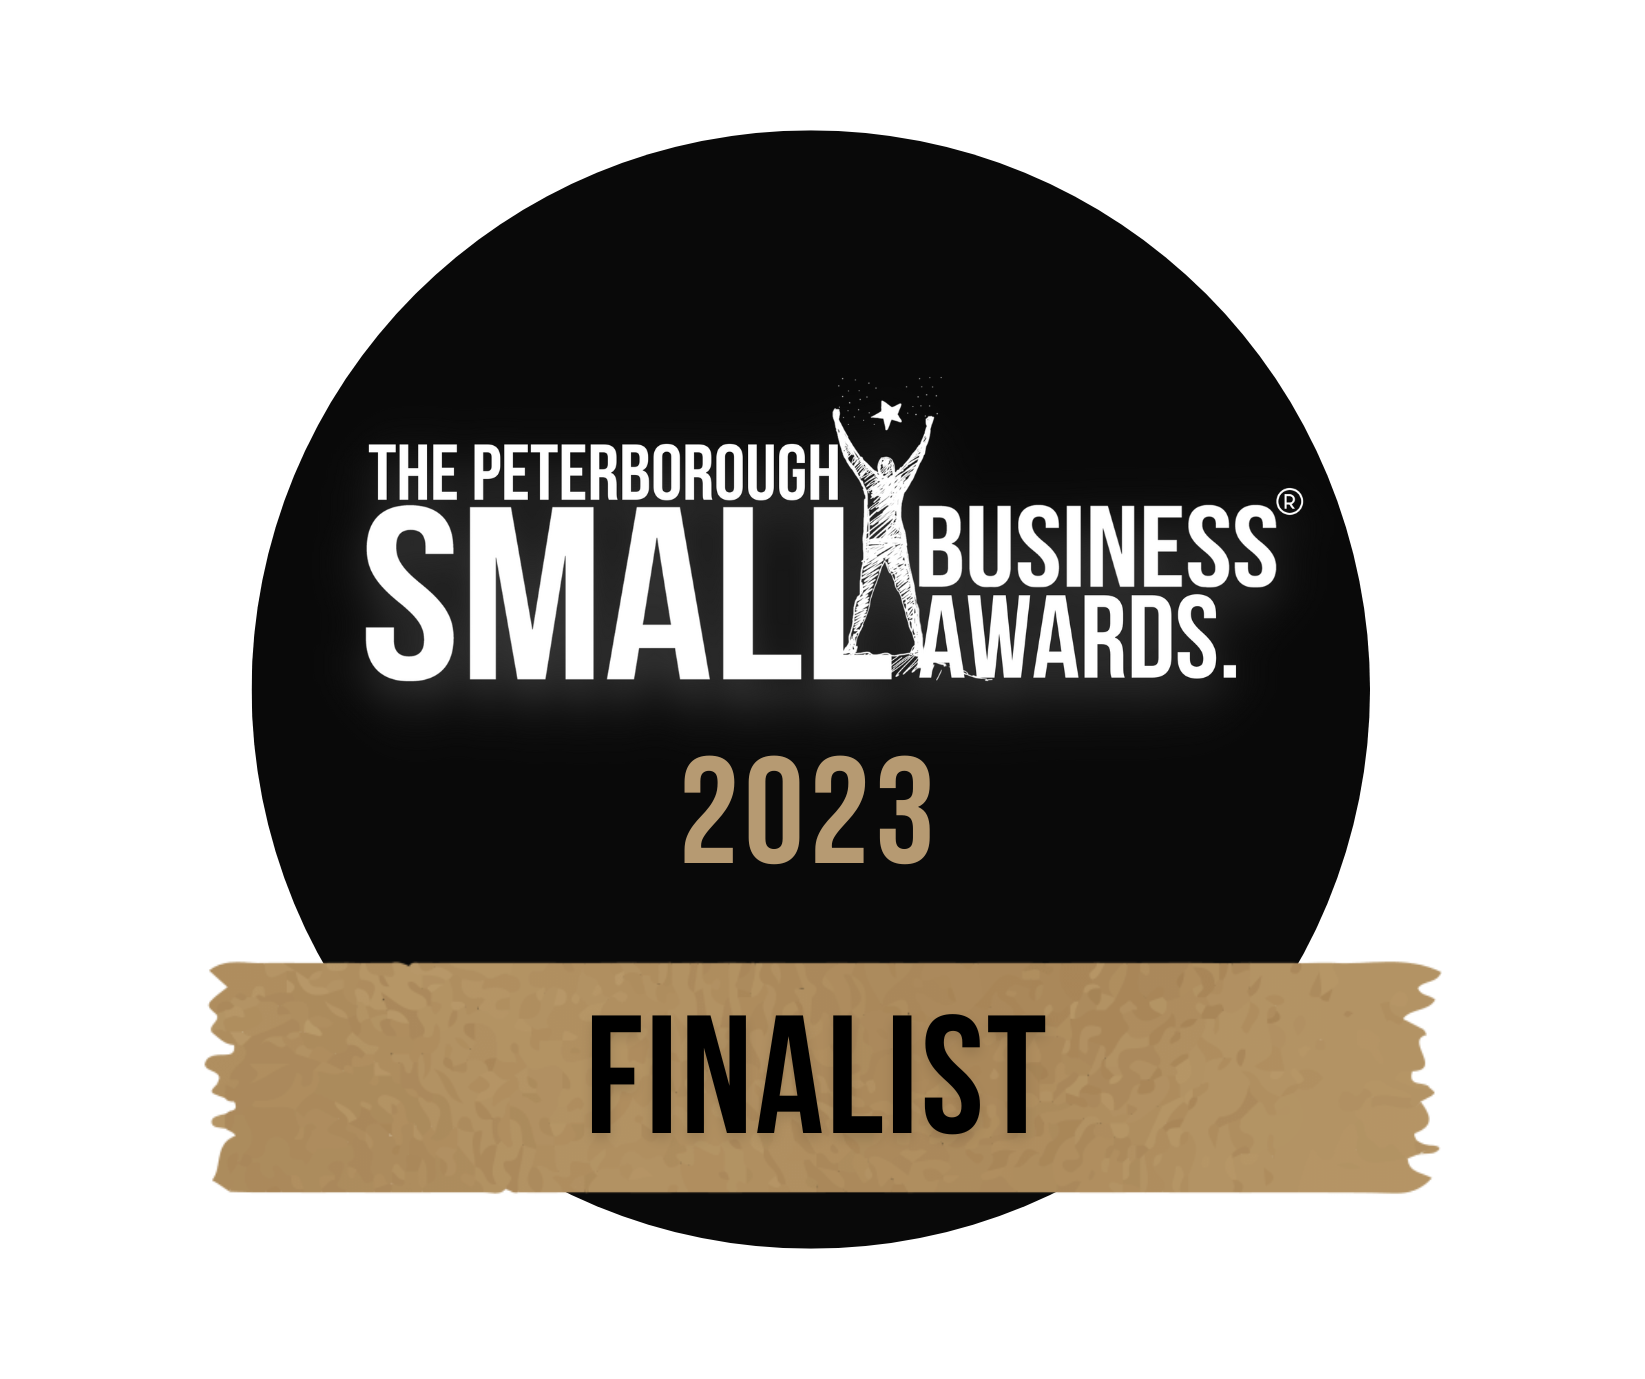 Peterborough Small Business Awards Finalist 2023